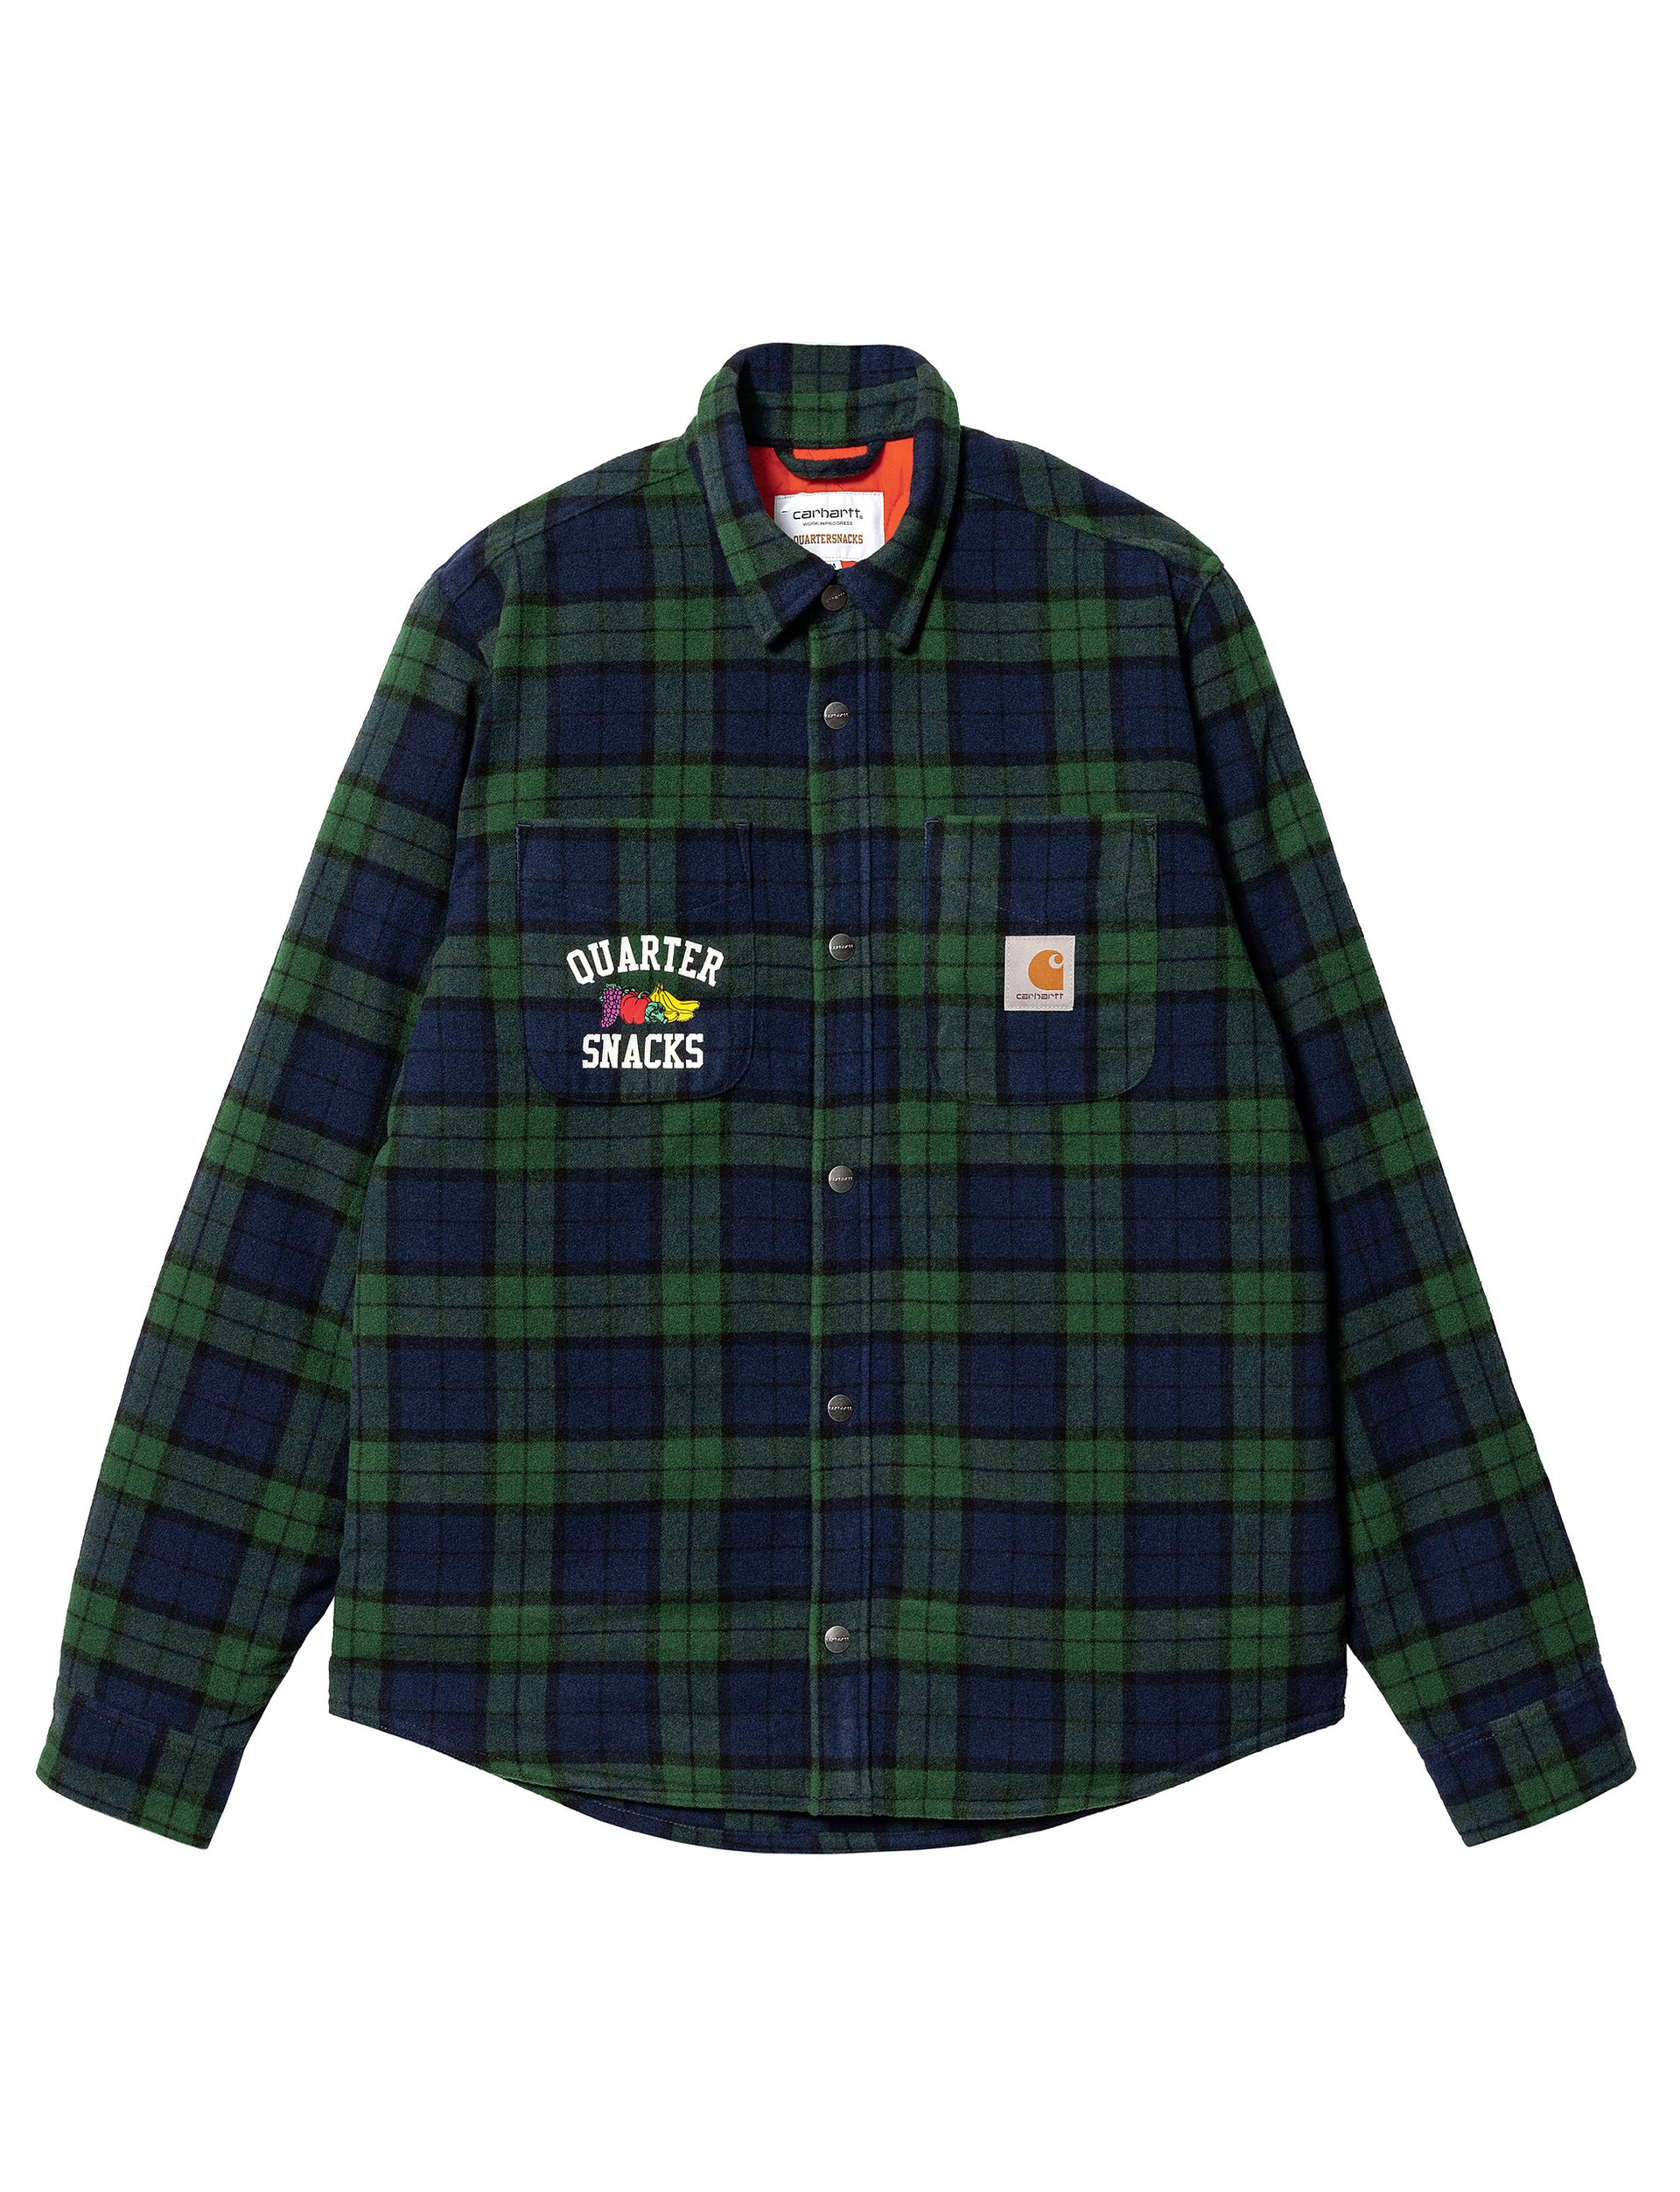 CARHARTT WIP Quartersnacks Shirt Jacket CHECK GREEN